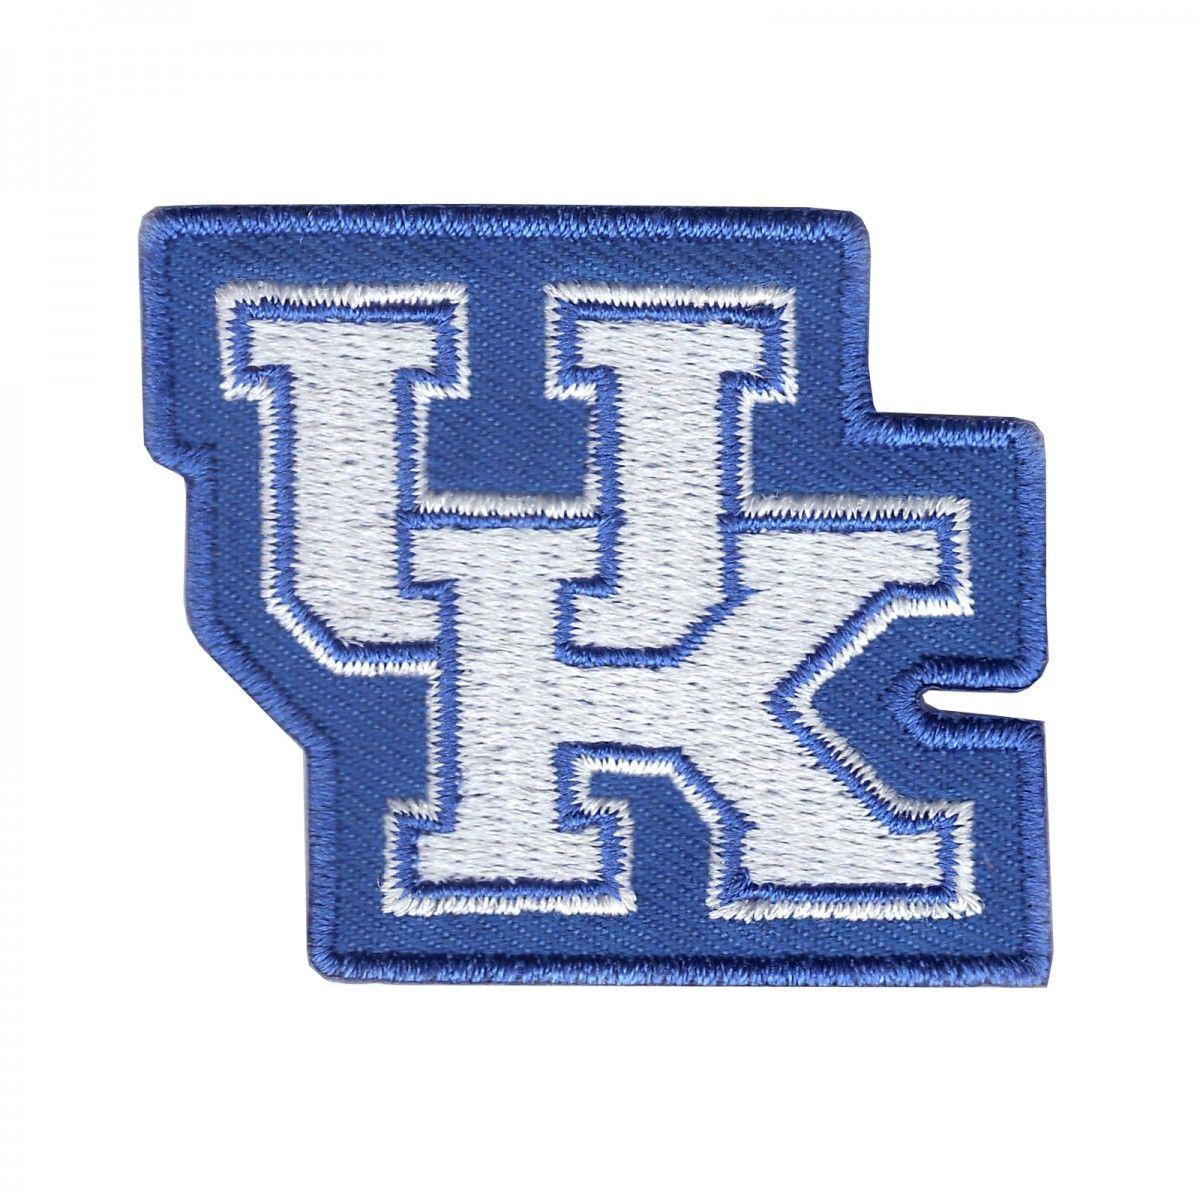 U of K Logo - Kentucky Wildcats Alternate Logo Iron On Embroidered